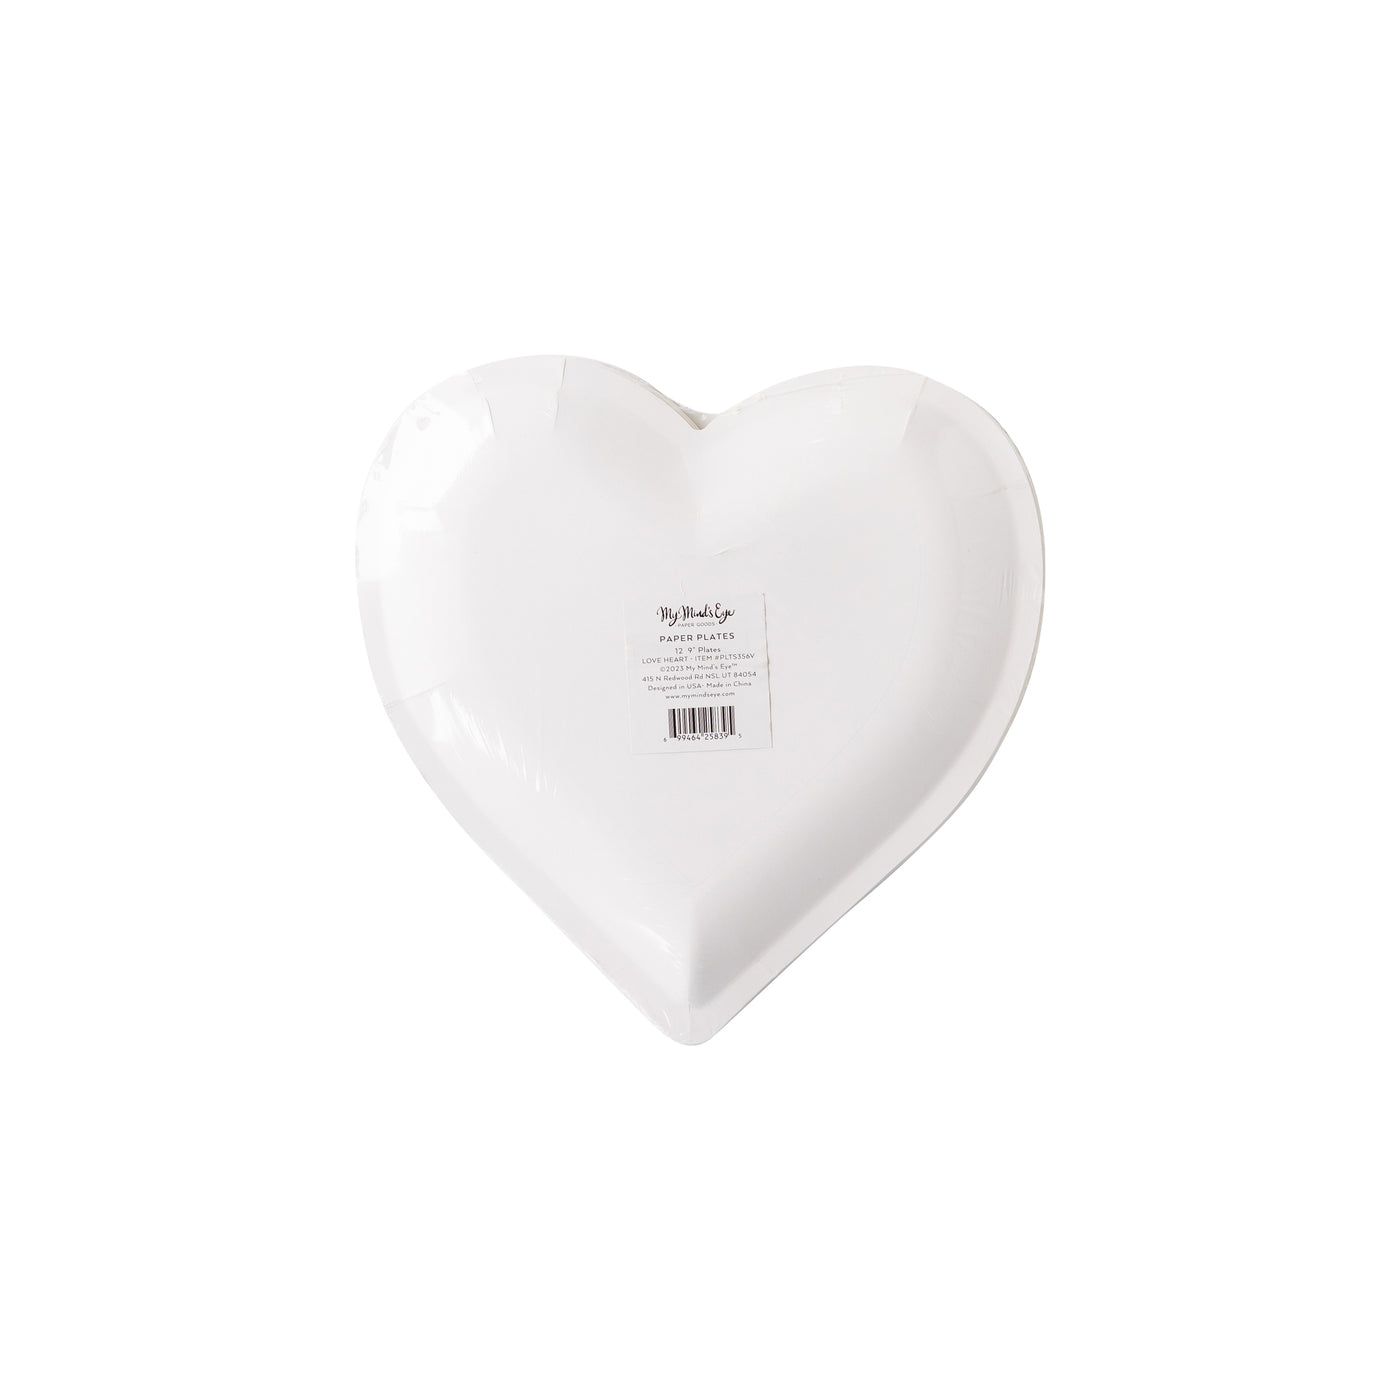 White Love Heart Shaped Plate